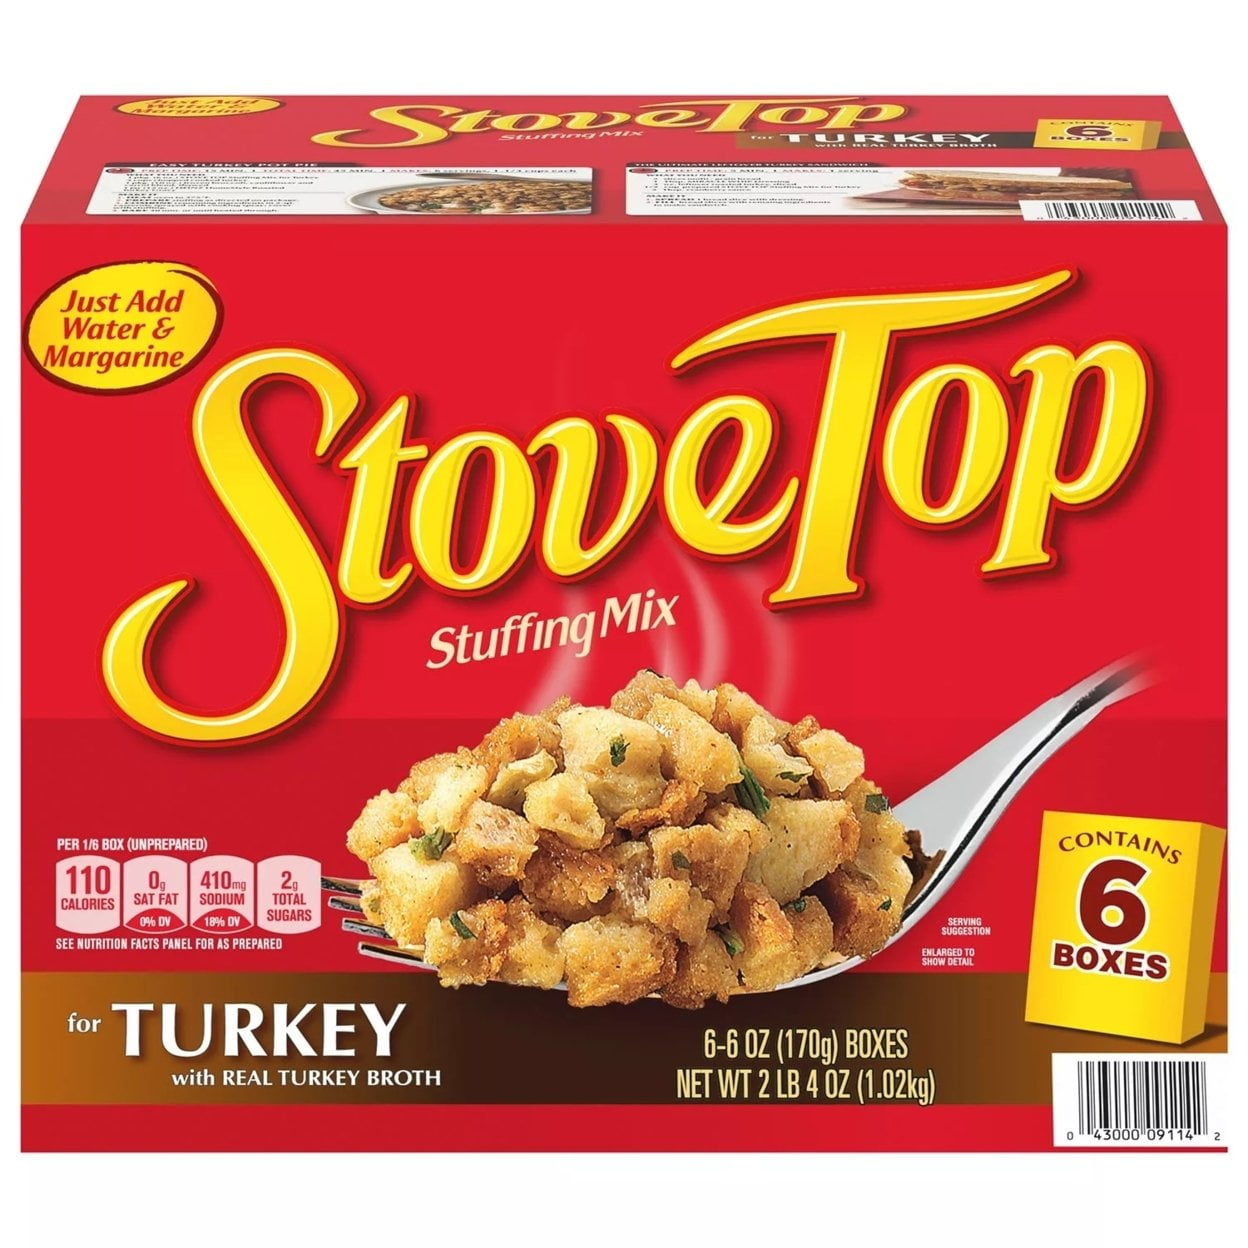 Food Lion Stuffing Mix Turkey Microwaveable - 6 oz box